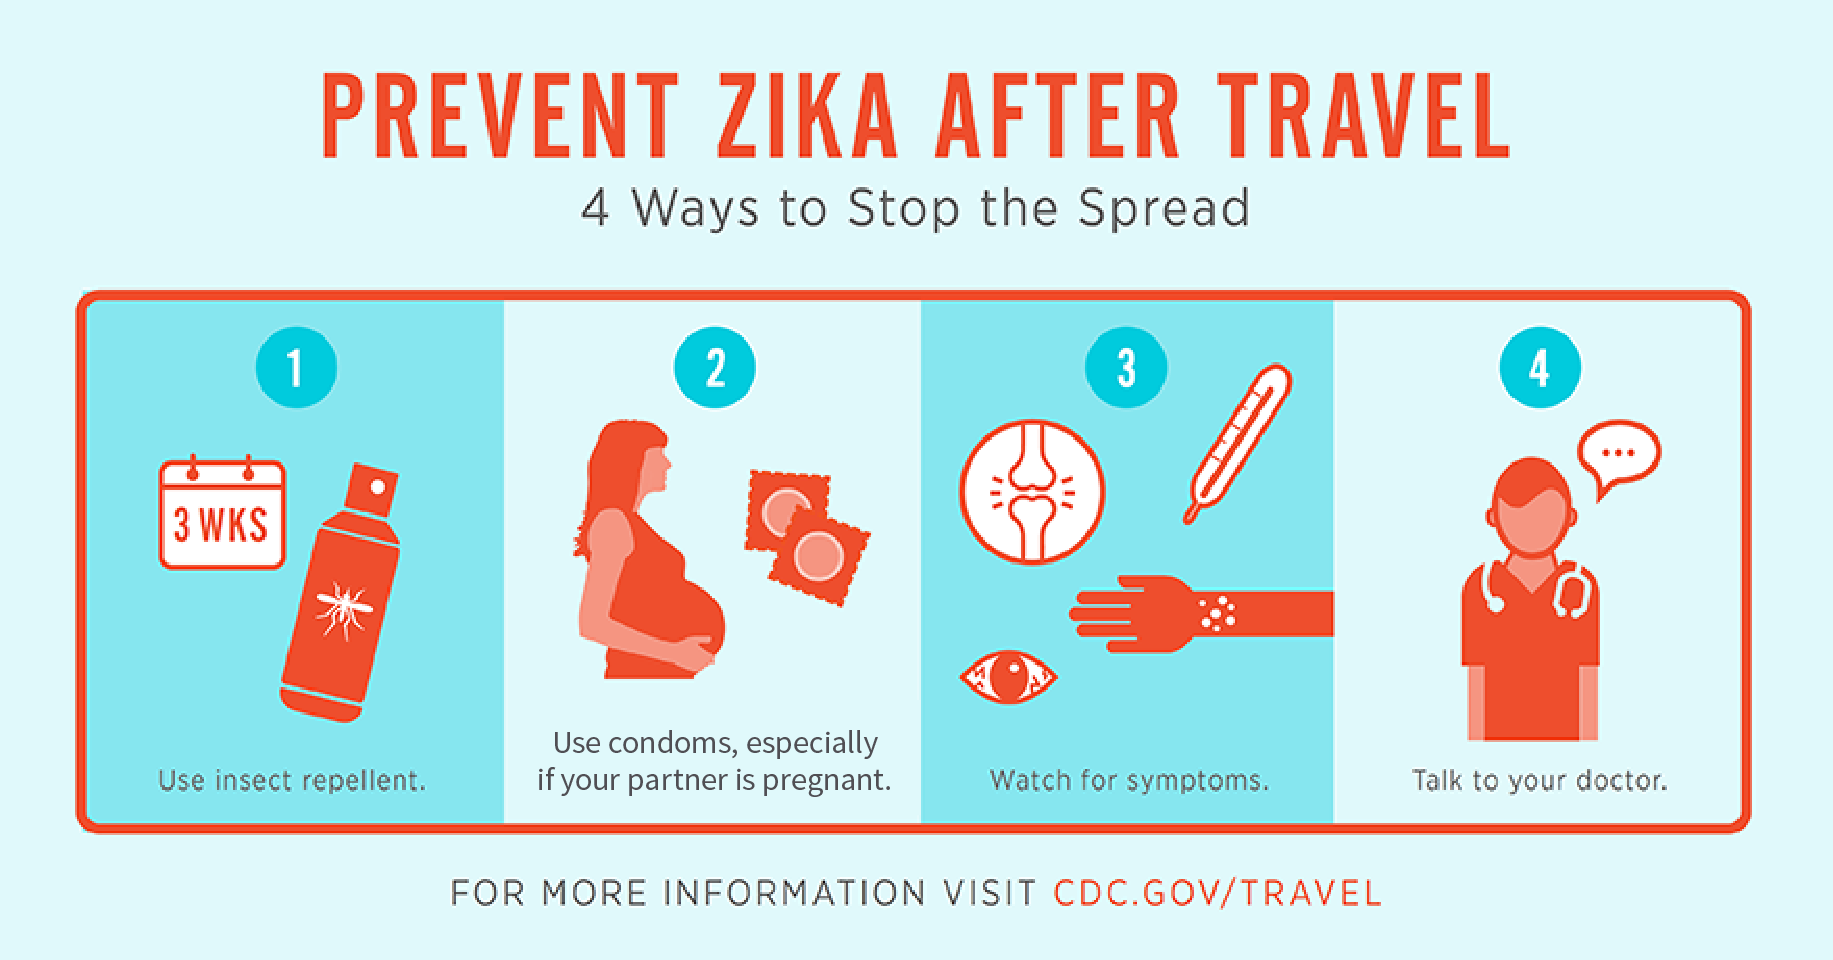 Prevent Zika after travel